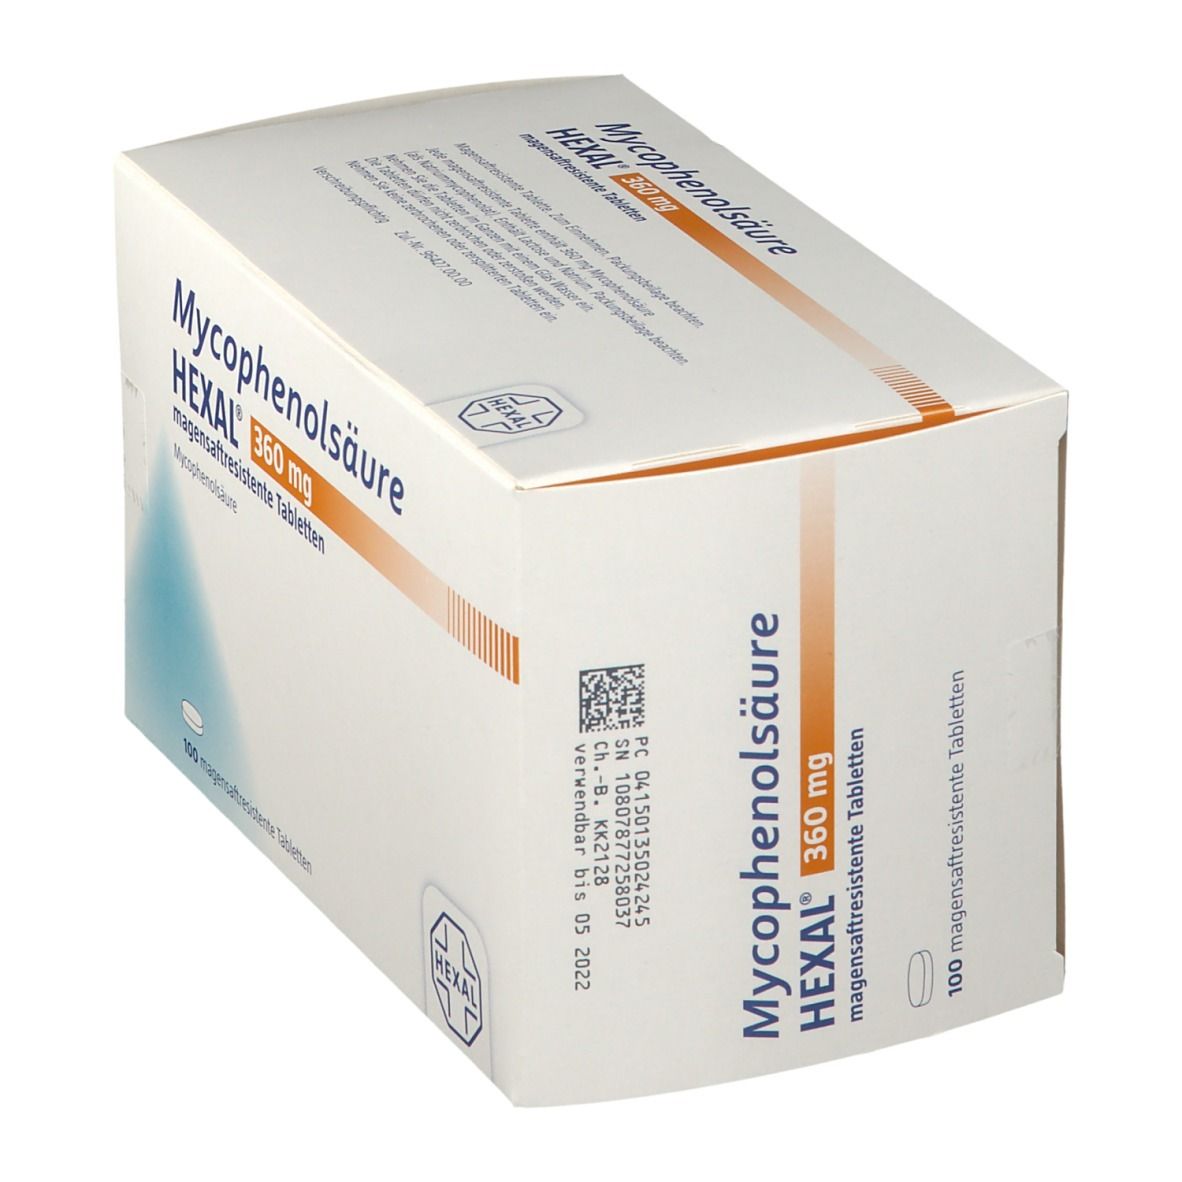 Mycophenolsäure HEXAL® 360 mg